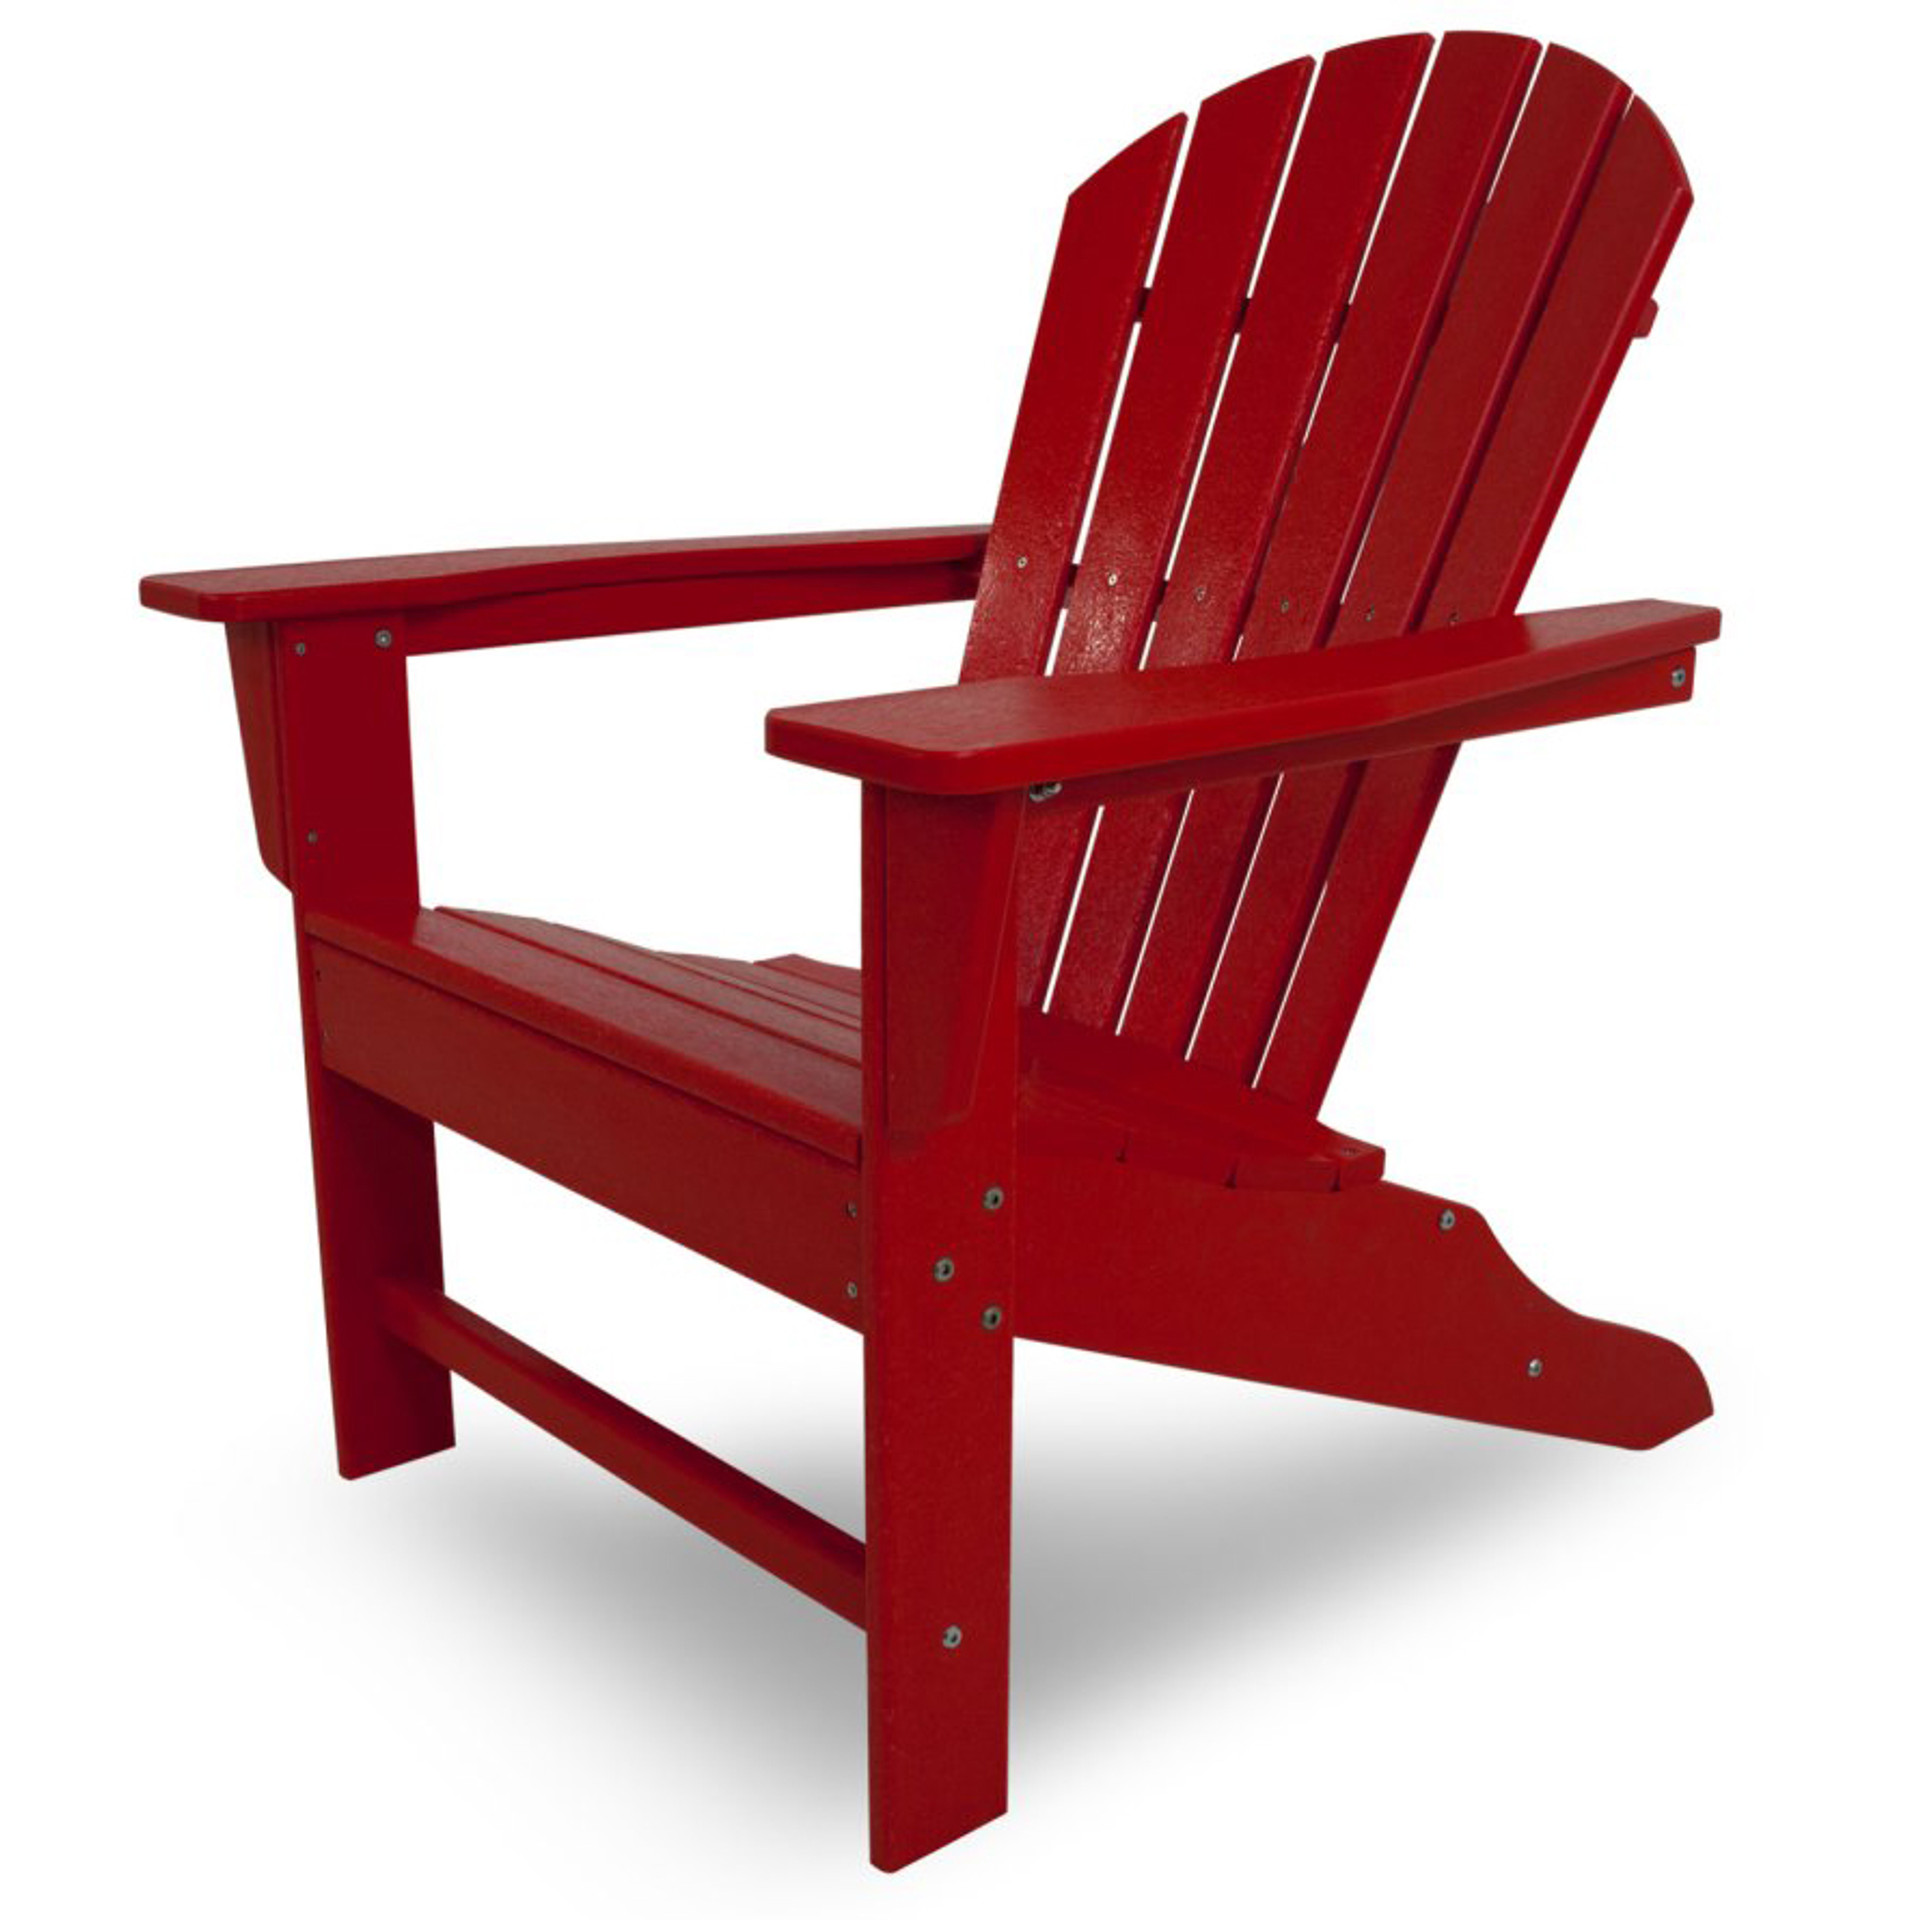 Polywood South Beach Adirondack Chair 59  40171.1646938860 ?c=1